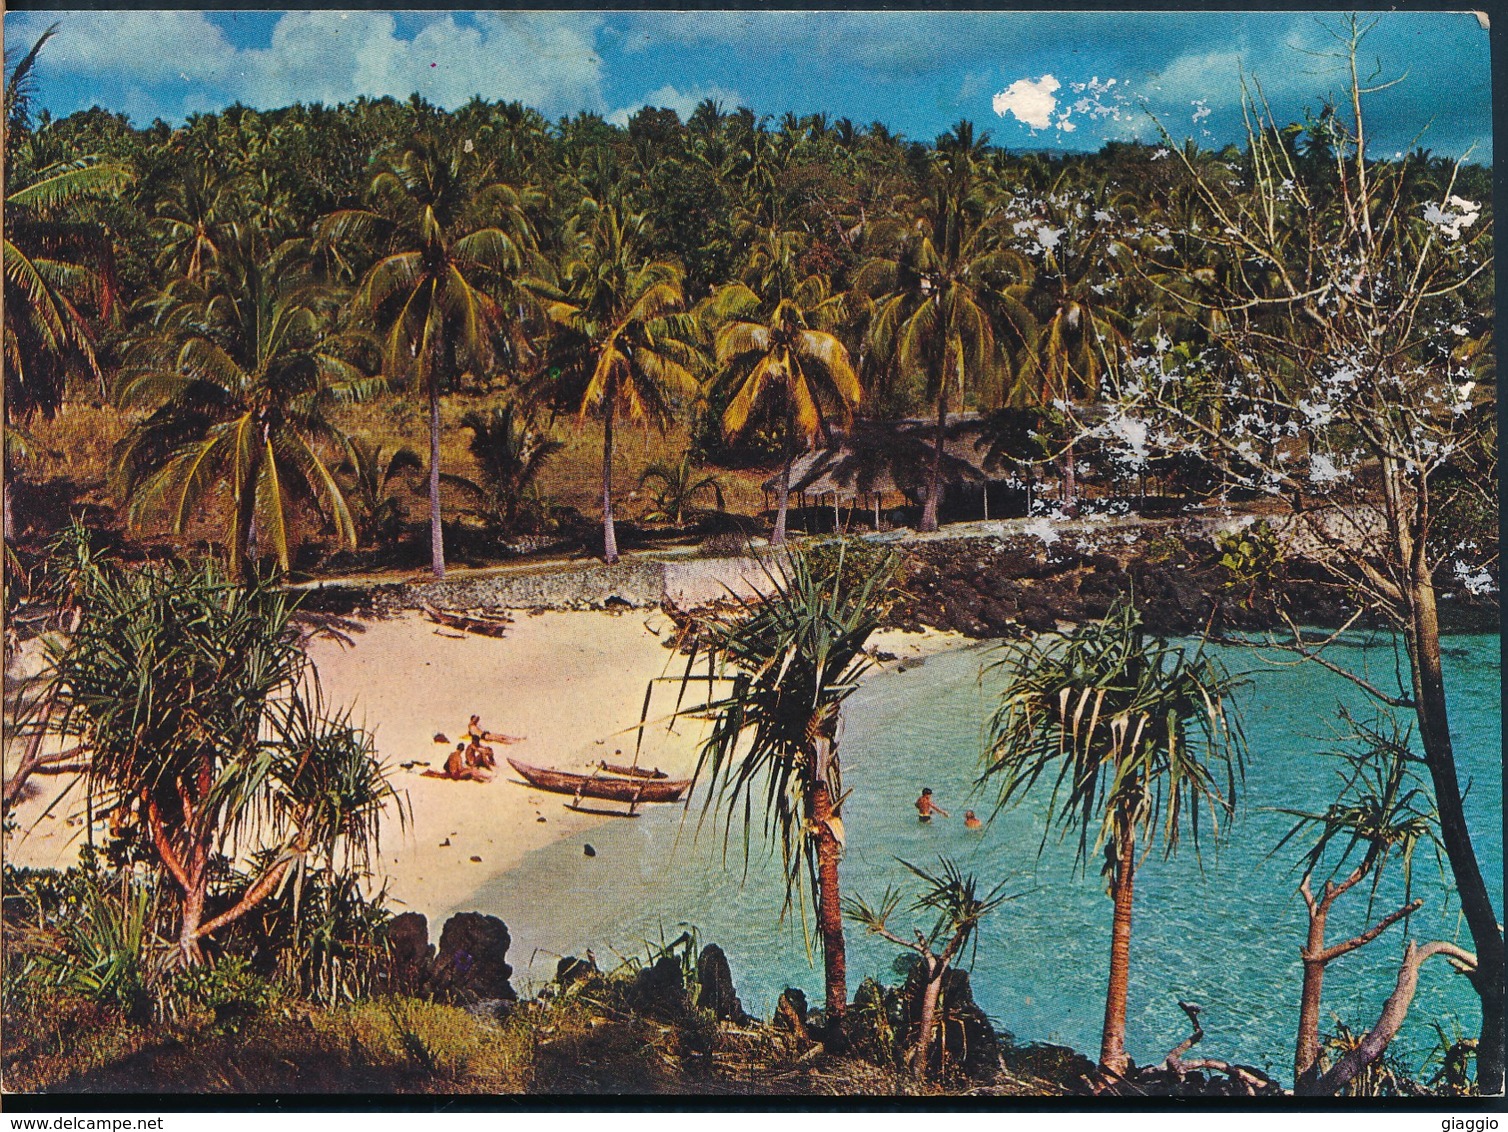 °°° 19305 - GRANDE COMORE - MORONI - HOTEL ITSANDRA °°° - Comores